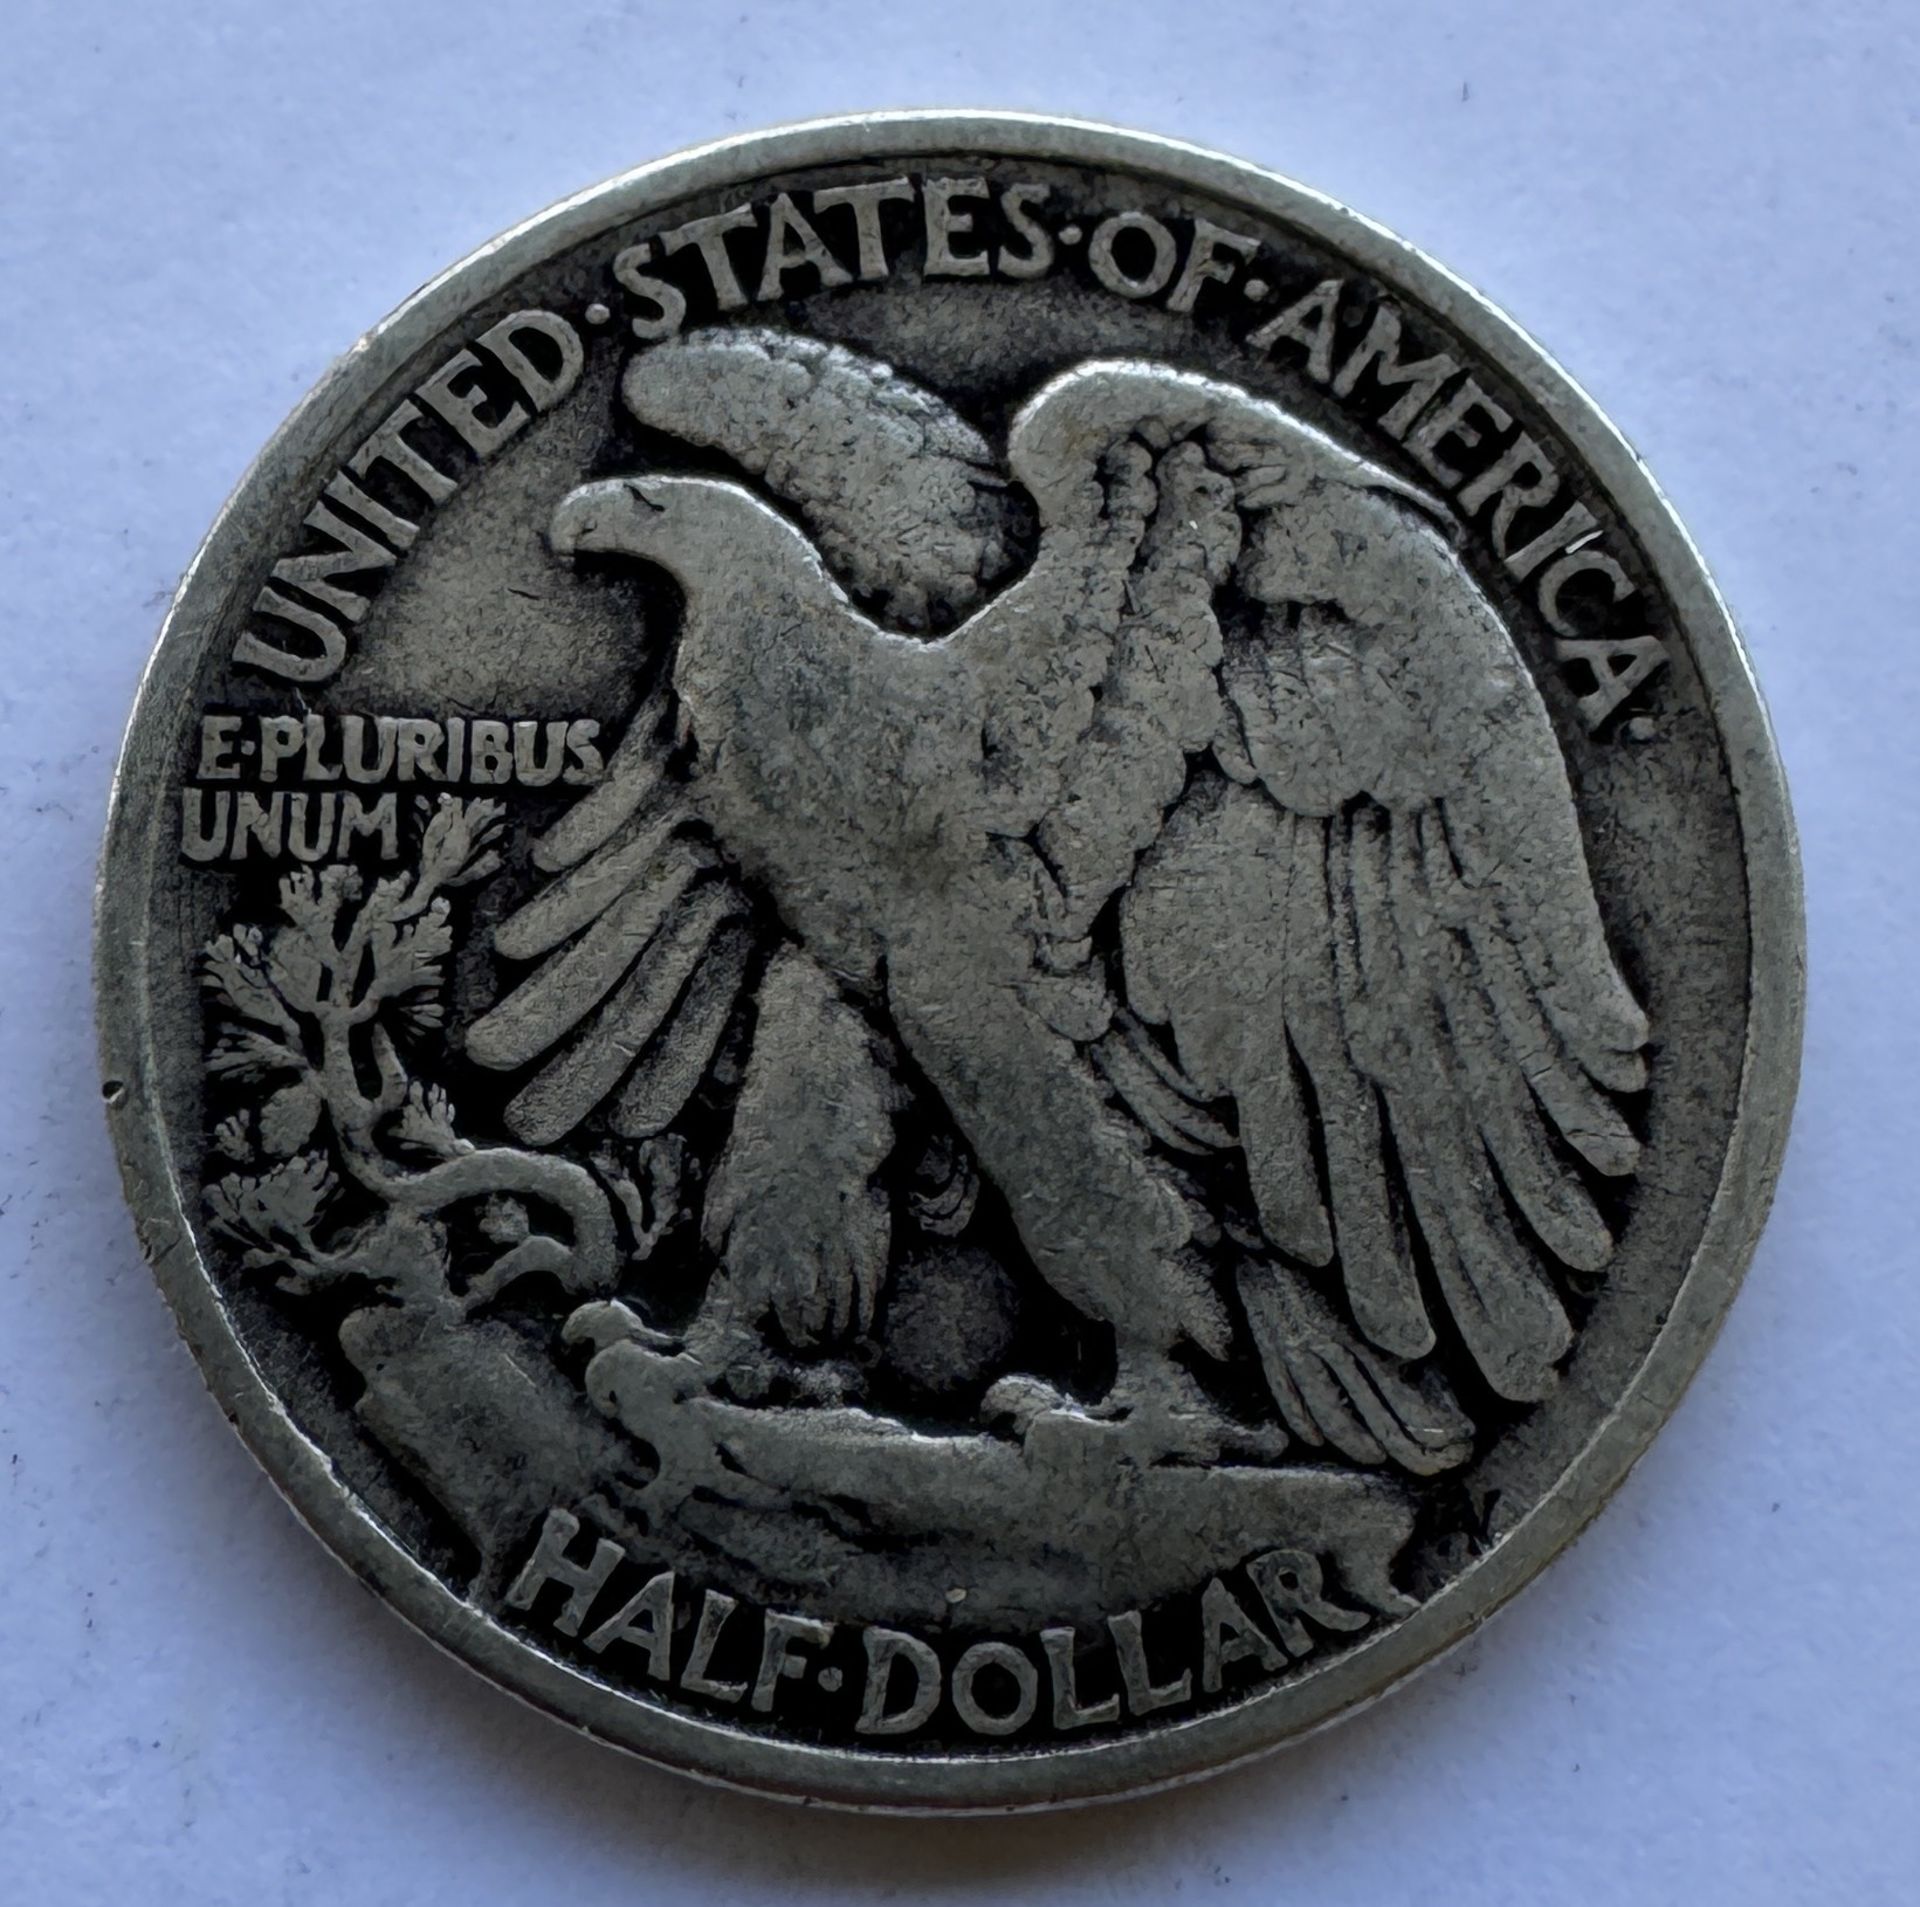 1943 WALKING LIBERTY HALF DOLLAR COIN - Image 2 of 2